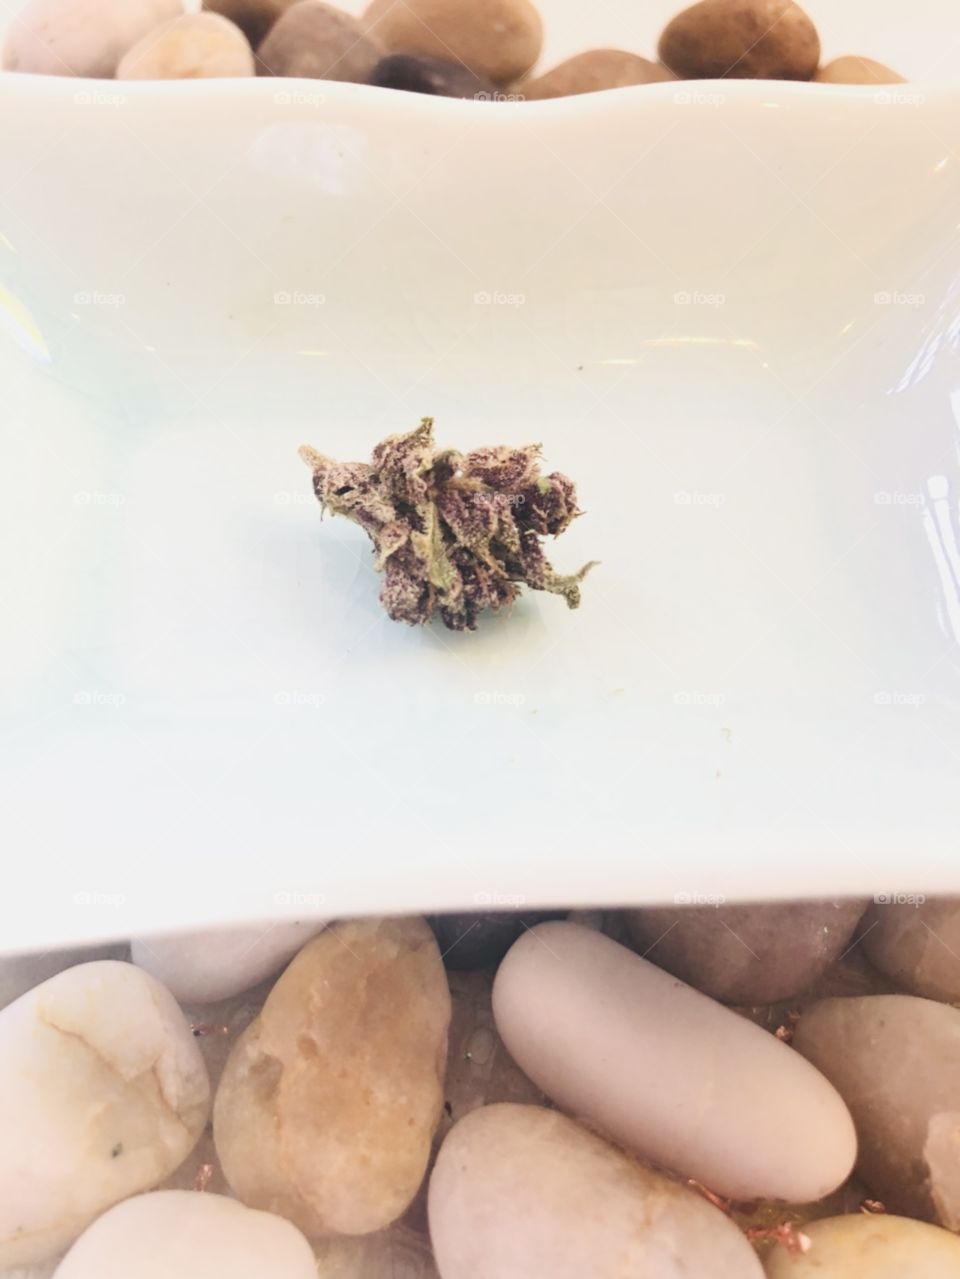 Still life Small bud marijuana cannabis in ceramic dish with stones 